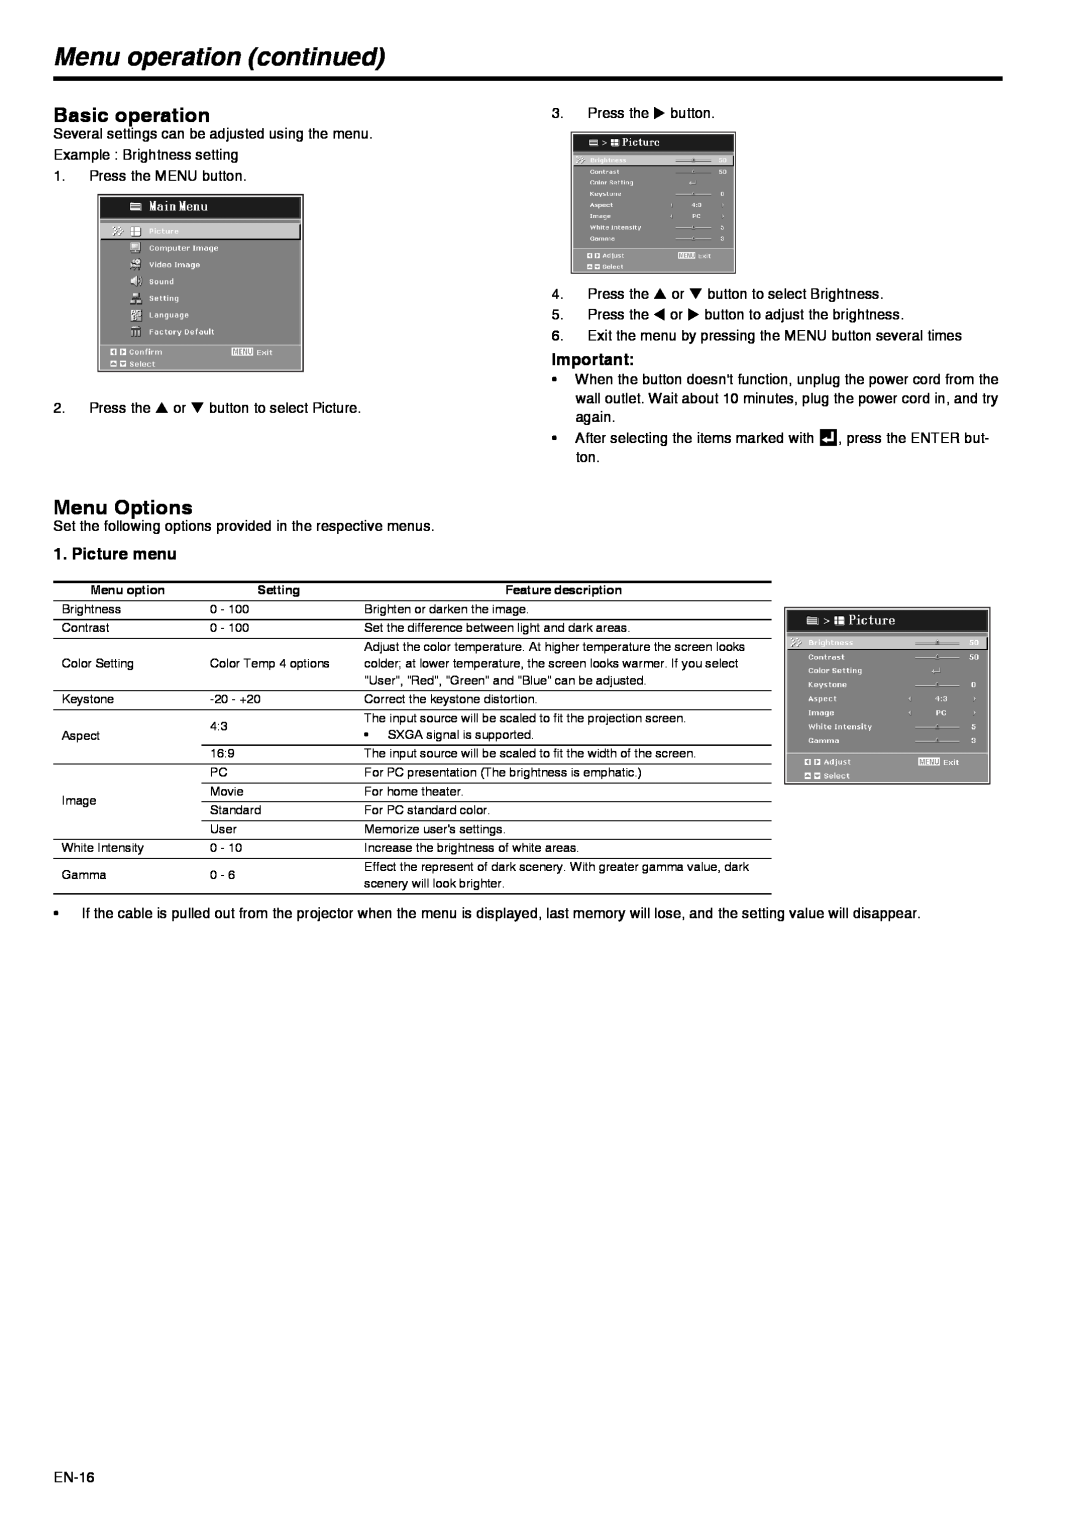 Mitsubishi Electronics XD211U user manual Menu operation continued, Basic operation, Menu Options, Picture menu 